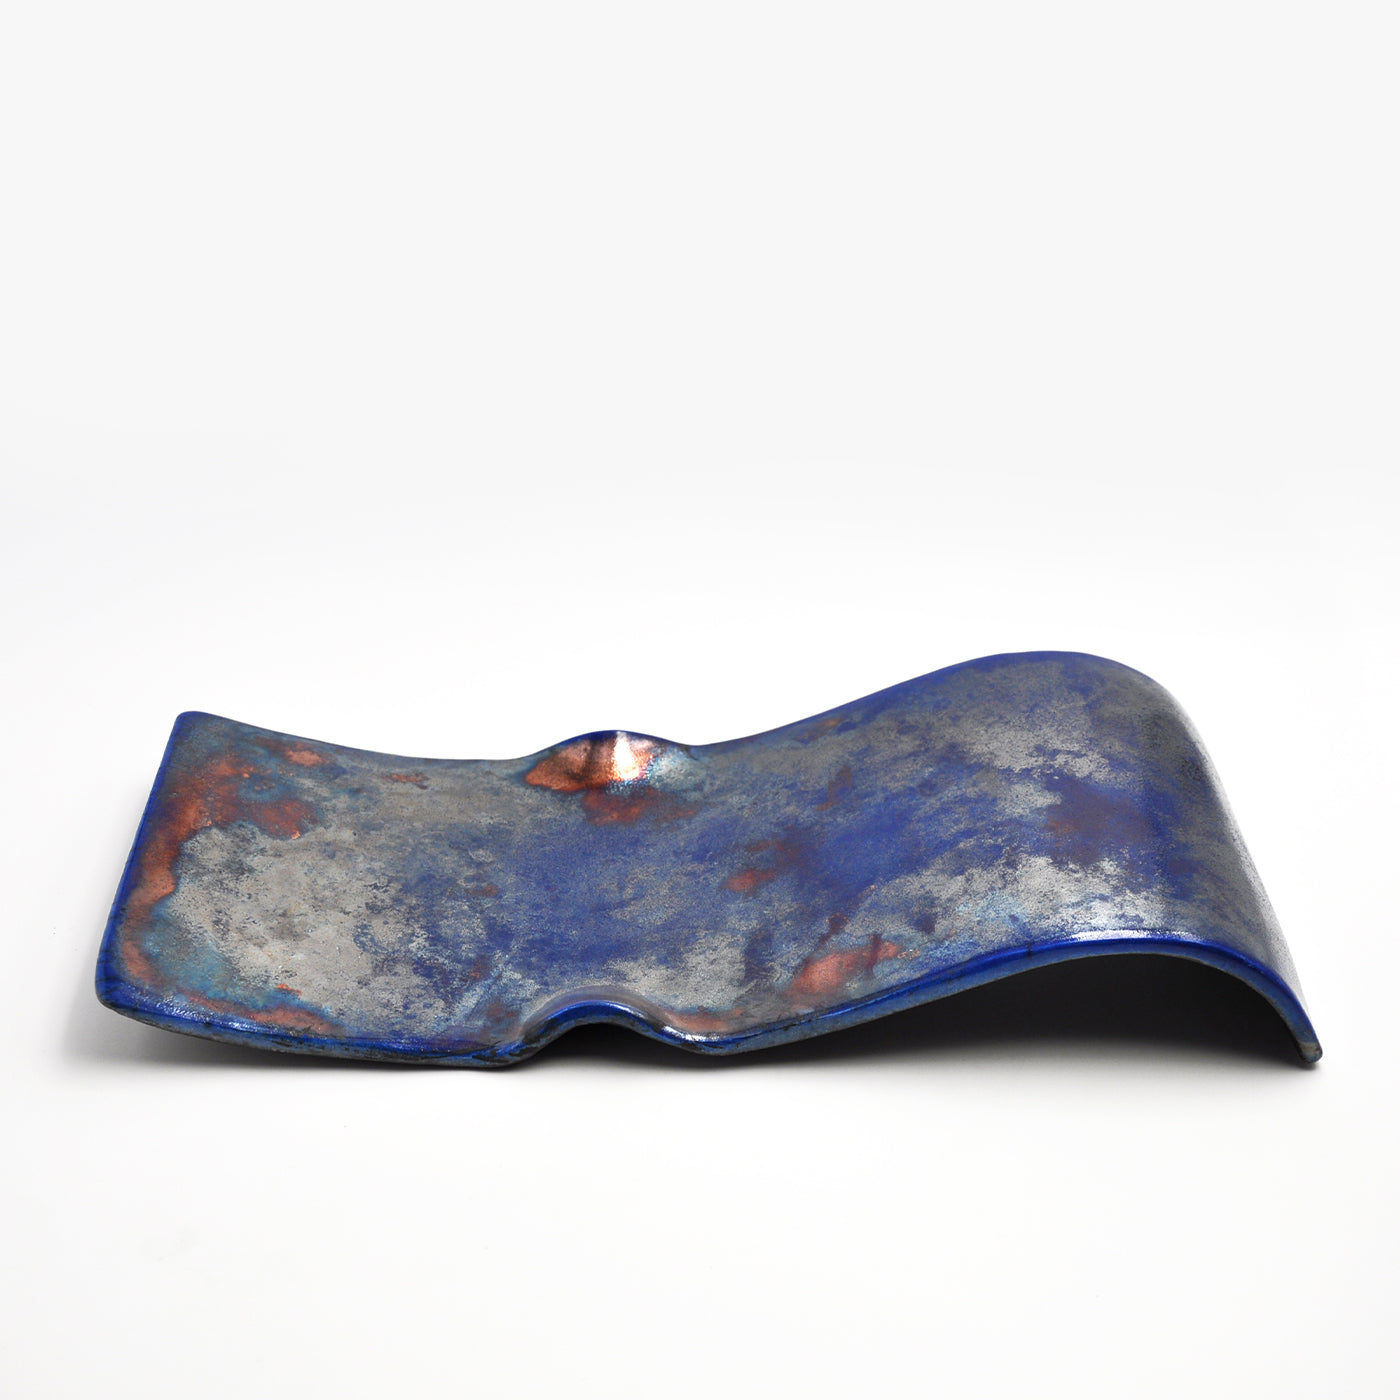 Onda Piccola Coppery/Blue Centerpiece Plate by Nino Basso - Alternative view 3